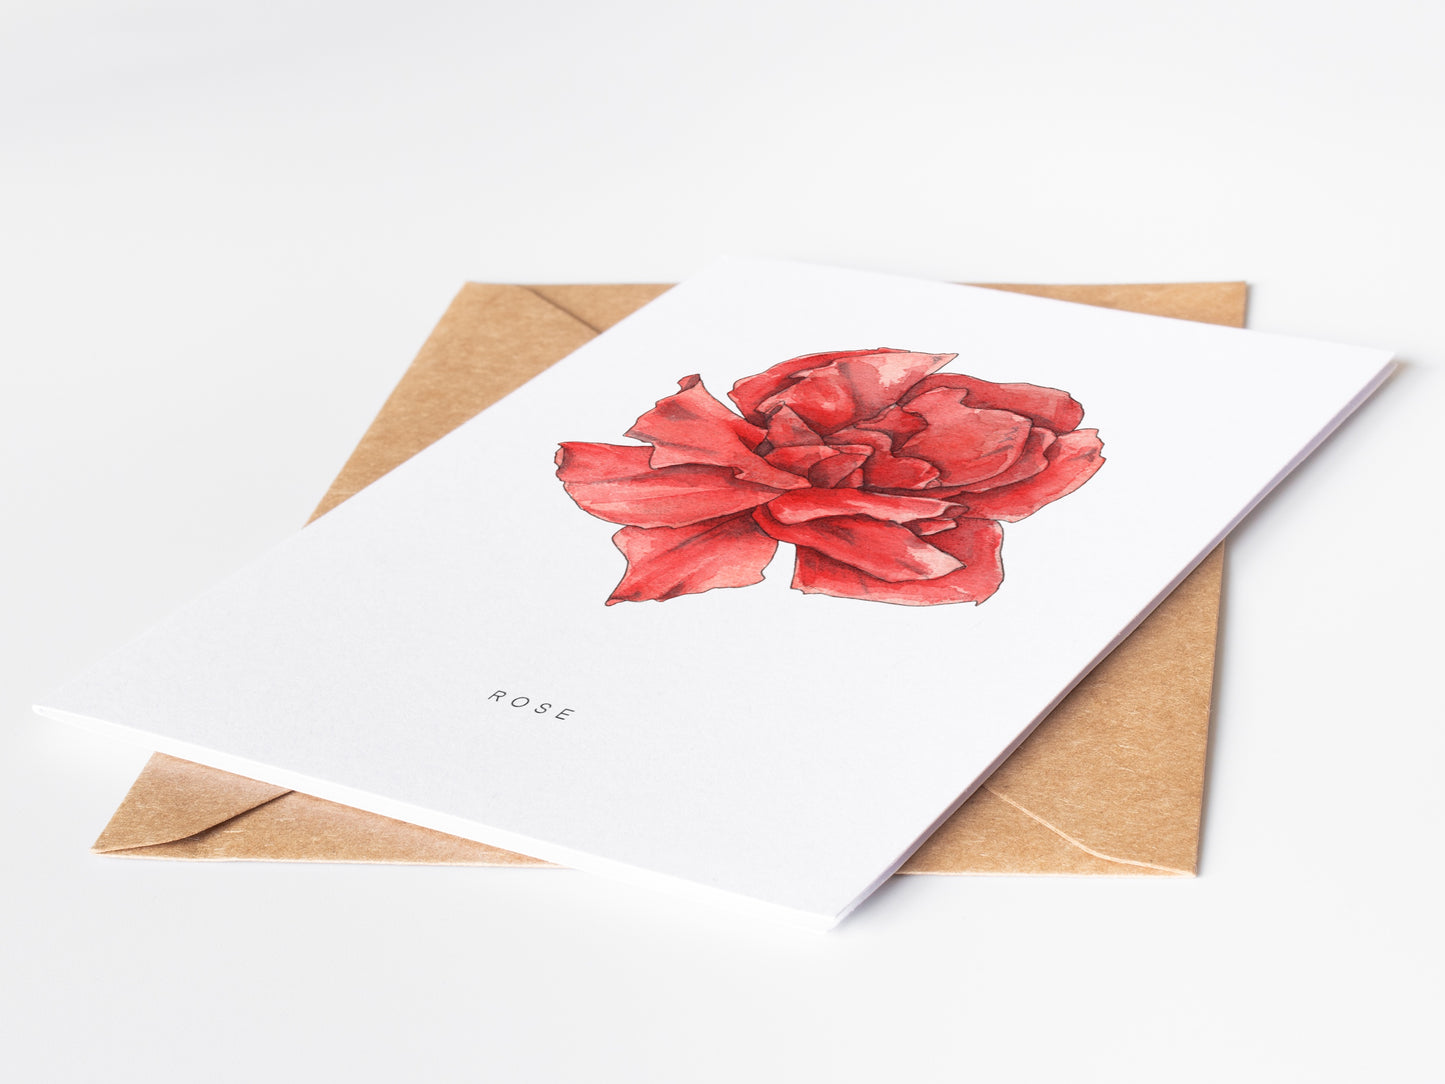 Rose Flower Greeting Card